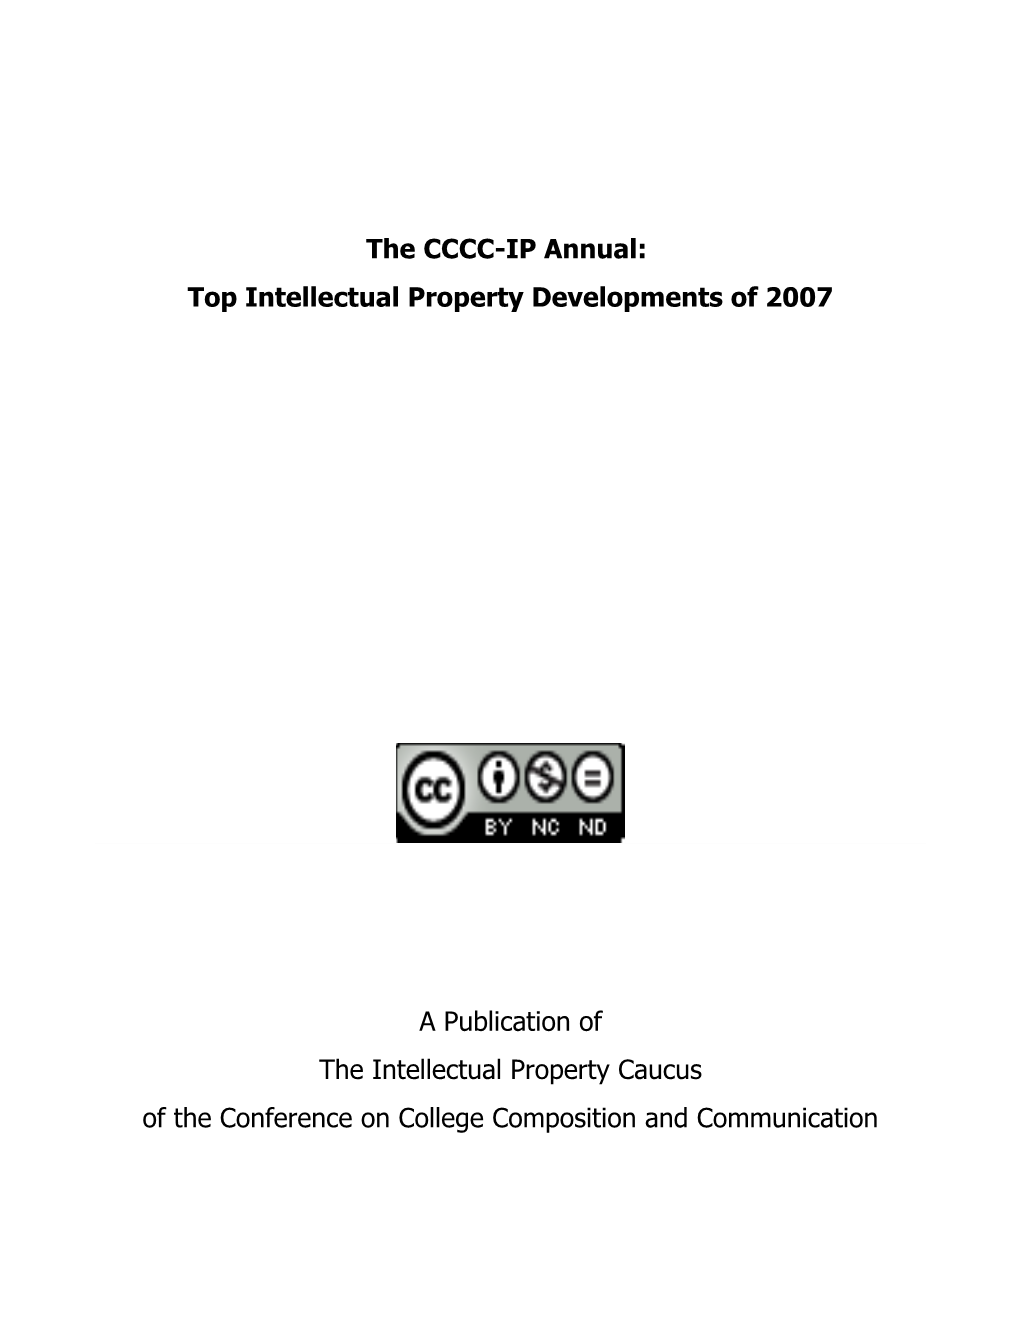 Top Intellectual Property Developments of 2007